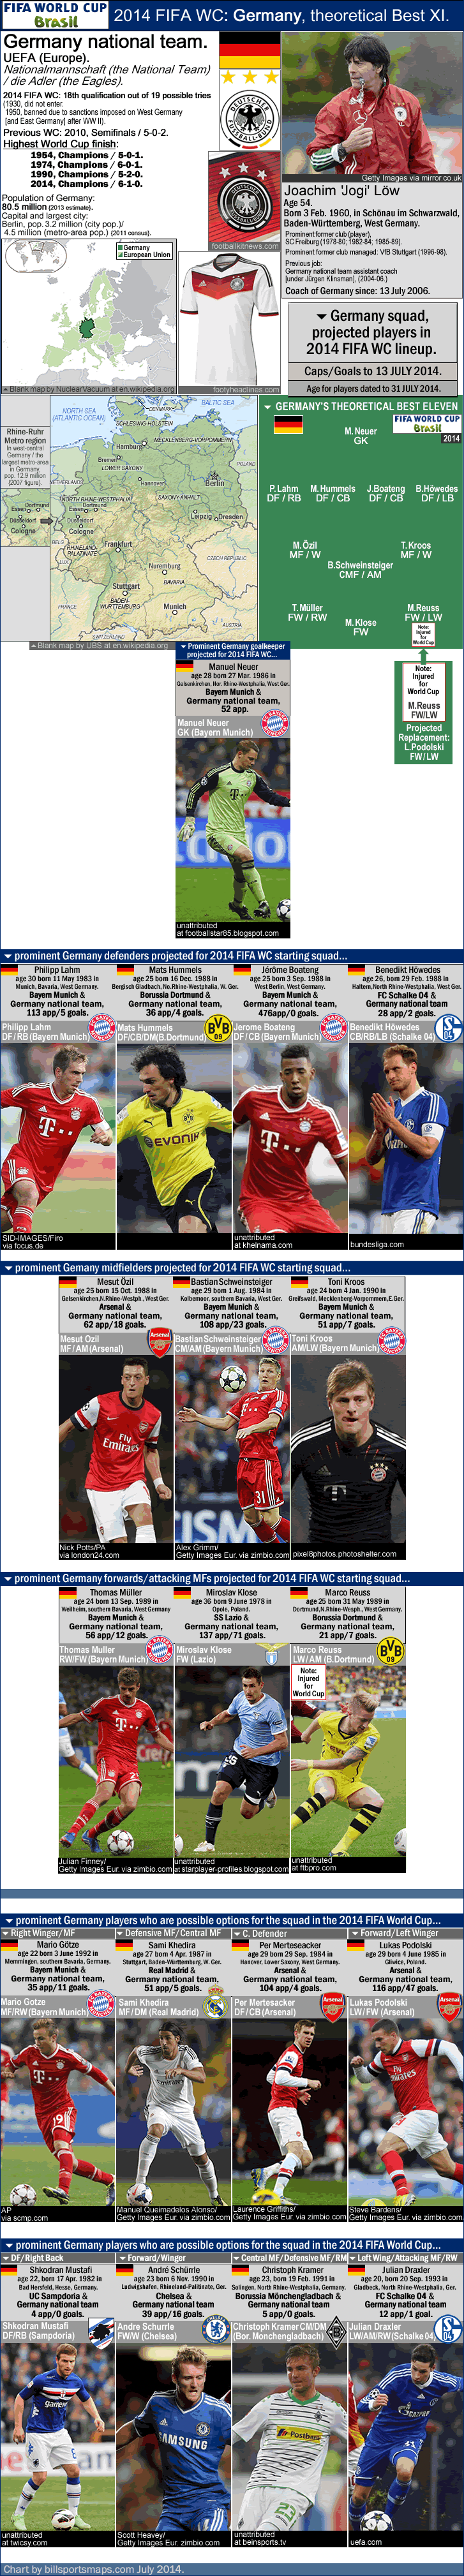 germany_2014-fifa-world-cup_squad_best-xi_alternate-options_j-lowe_june-14_f_.gif